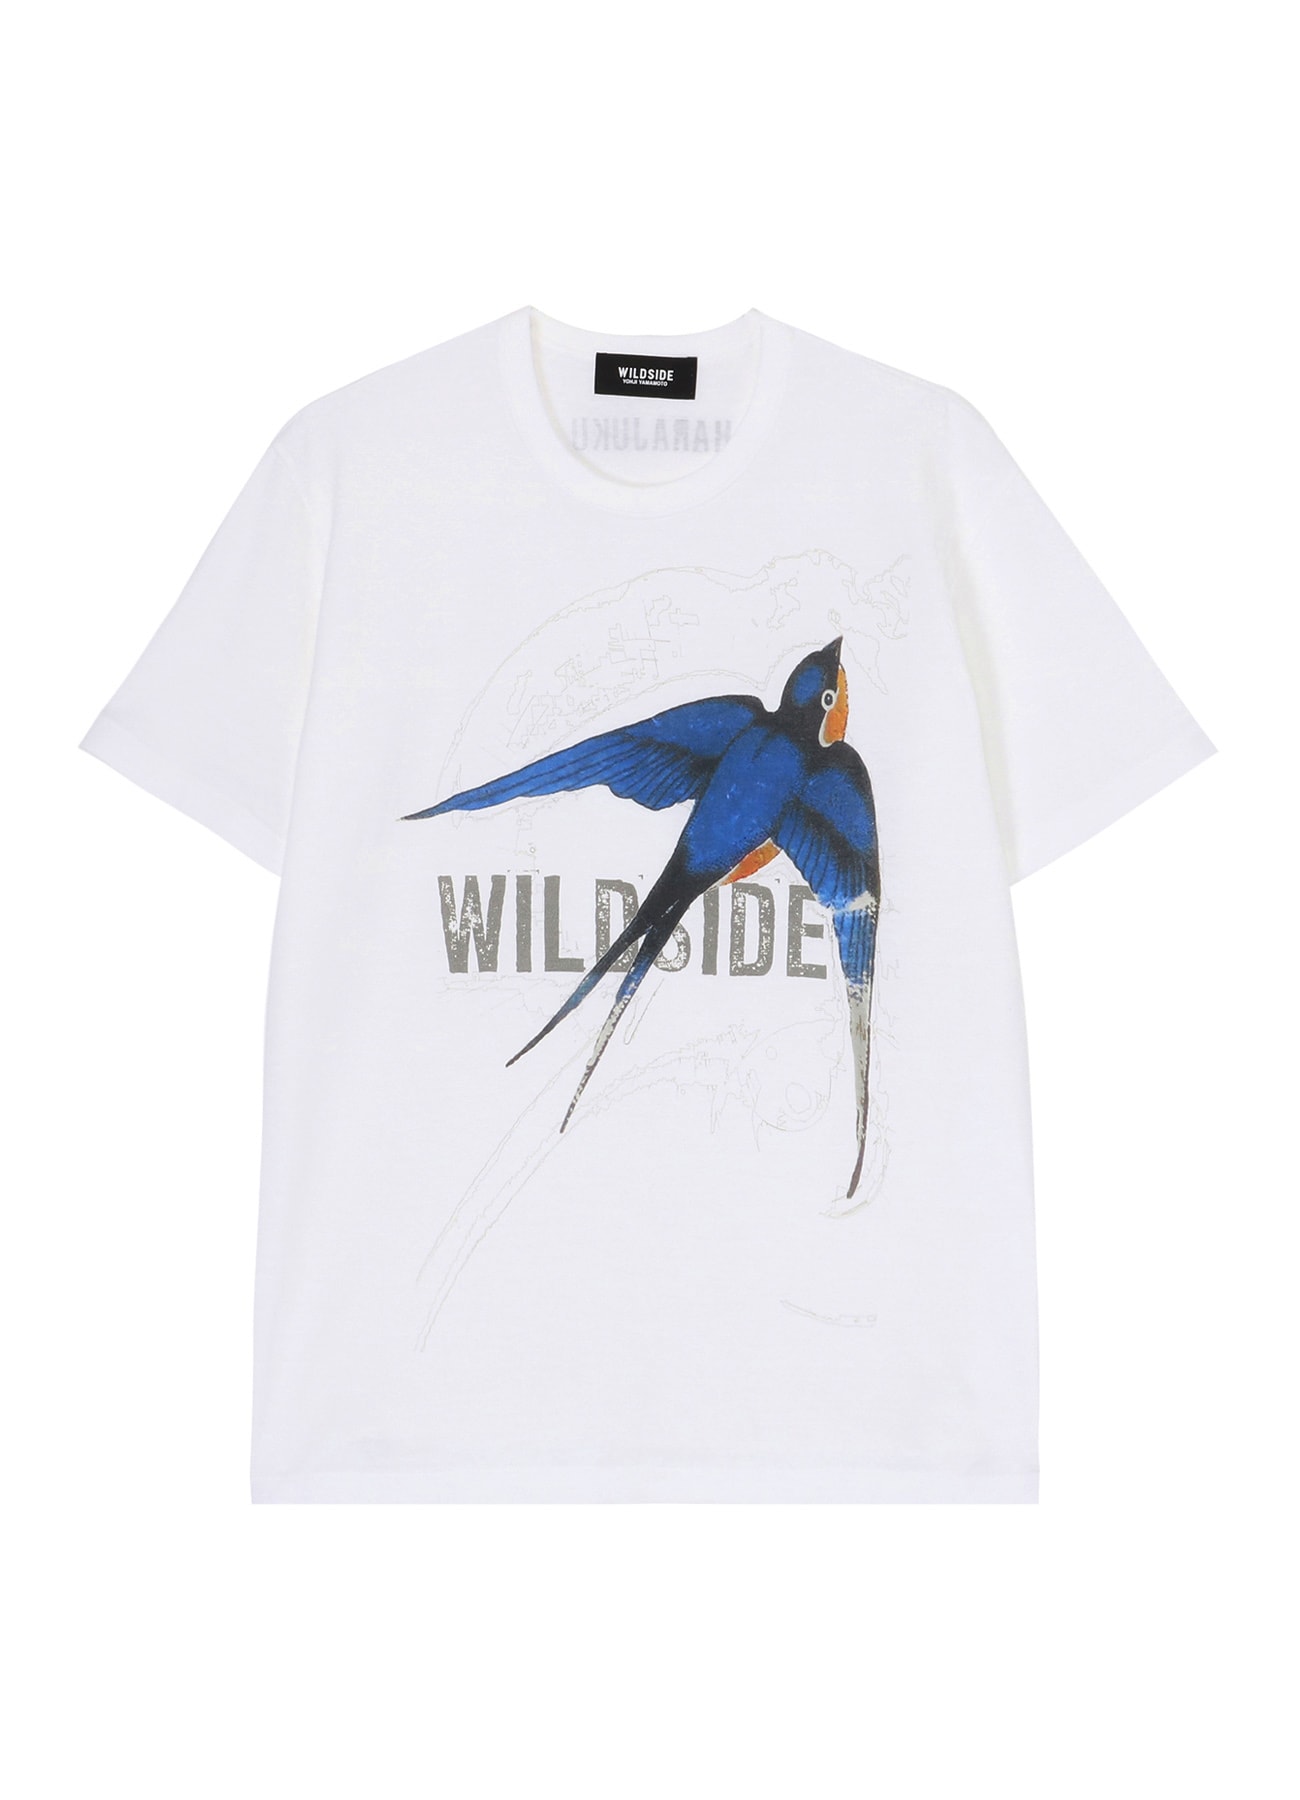 Swallow White T-Shirt